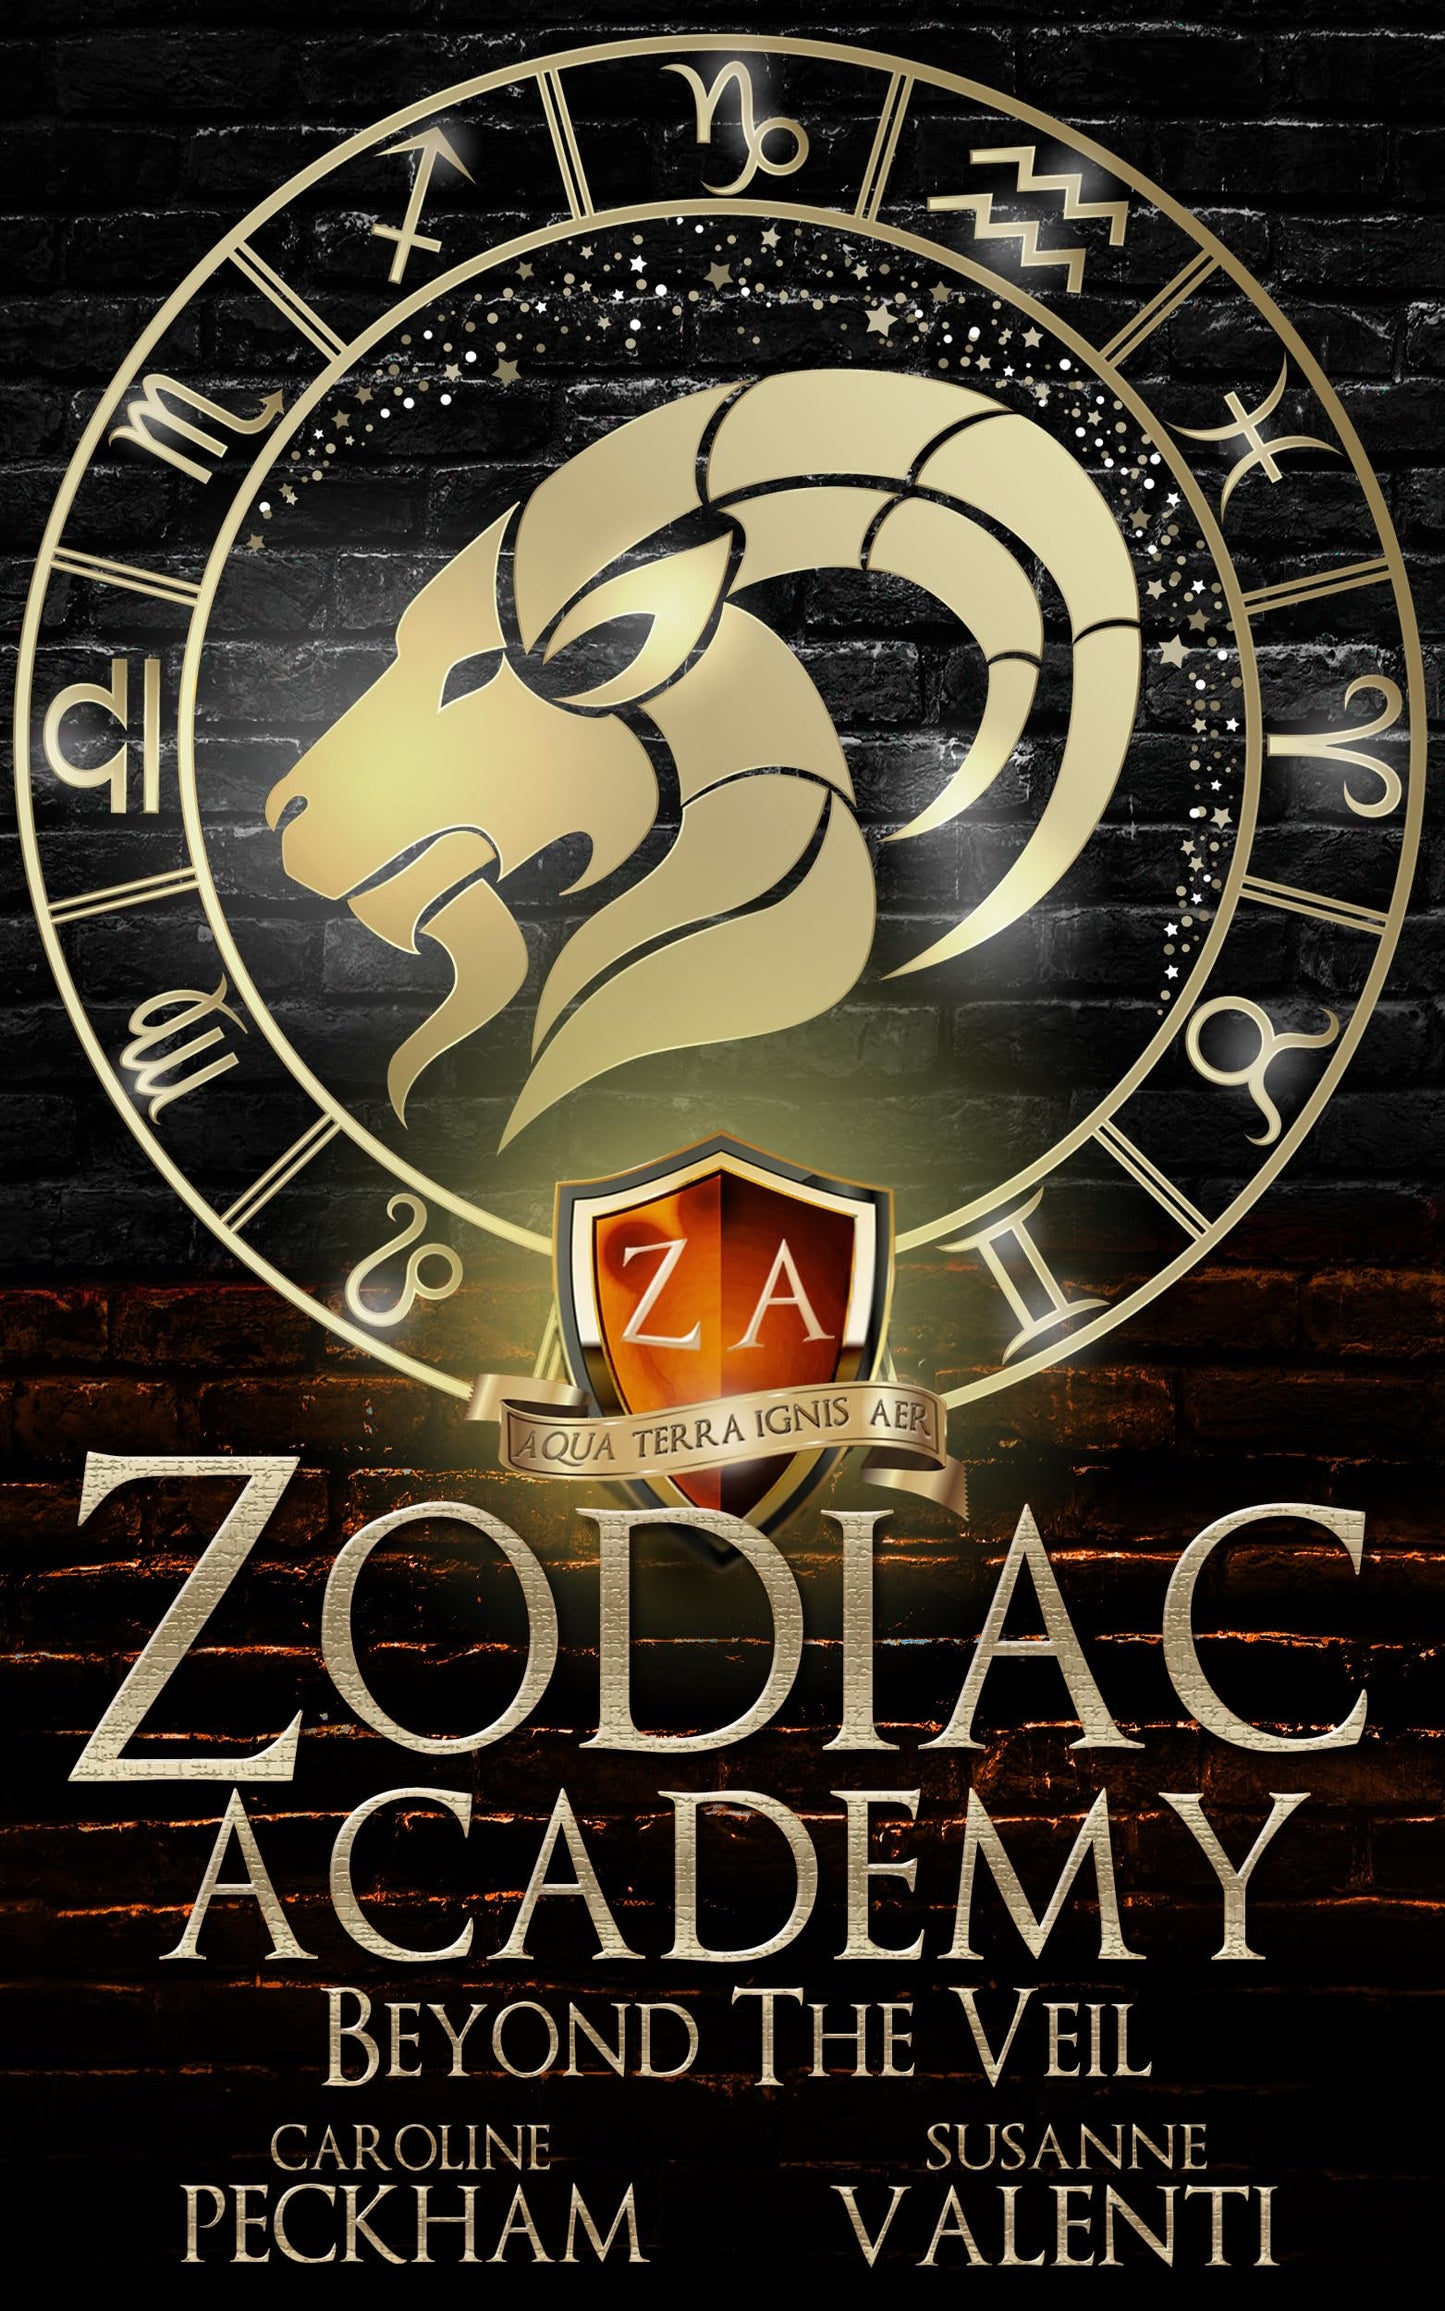 Beyond the Veil (Zodiac Academy 8.5) - Caroline Peckham